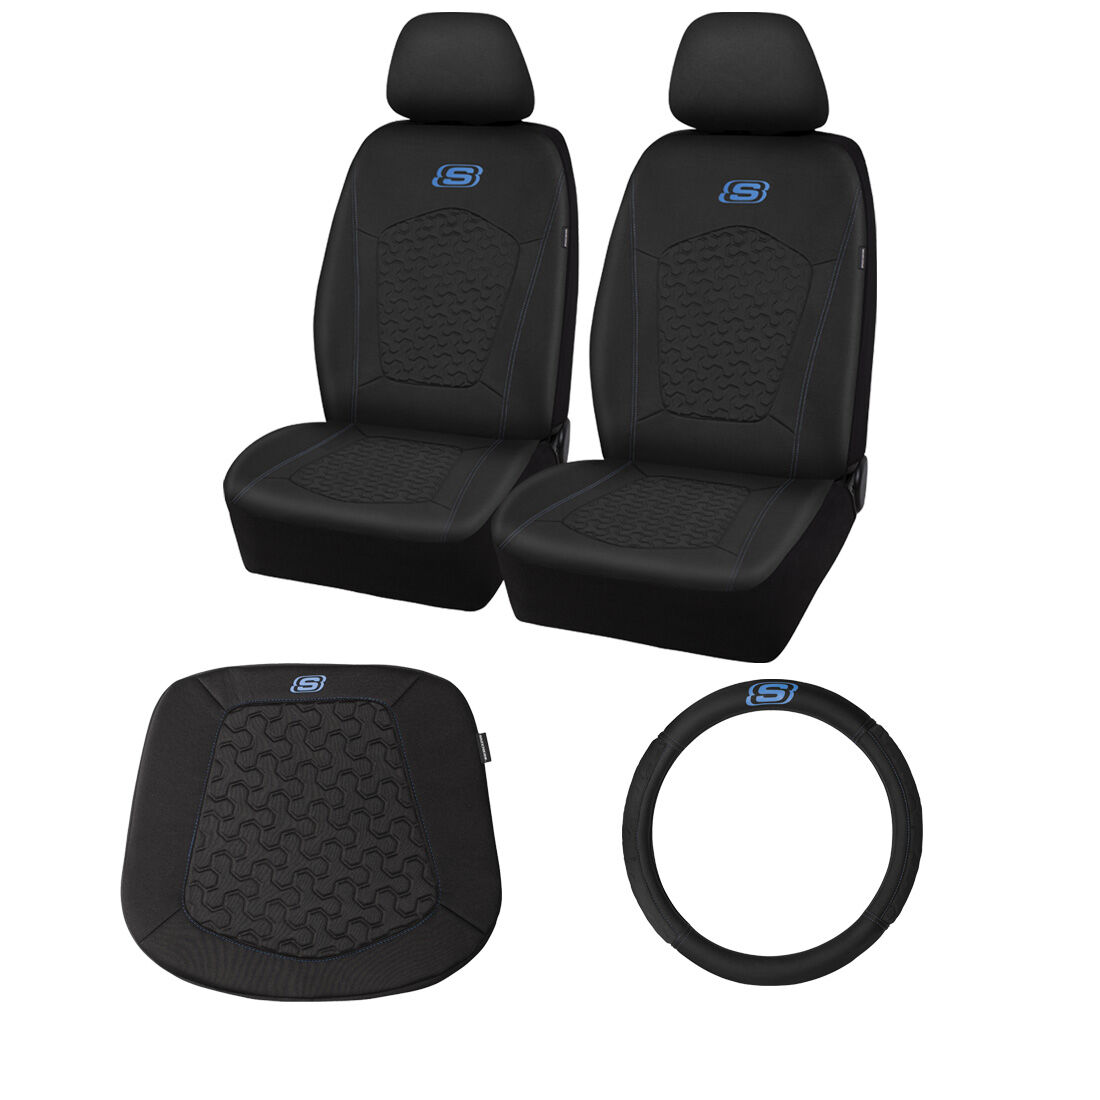 Car Seat Cushion For Car Seat Driver/passenger- Wedge Car Seat Cushions For  Driving Improve Vision/posture - Memory Foam Car Seat Cushion